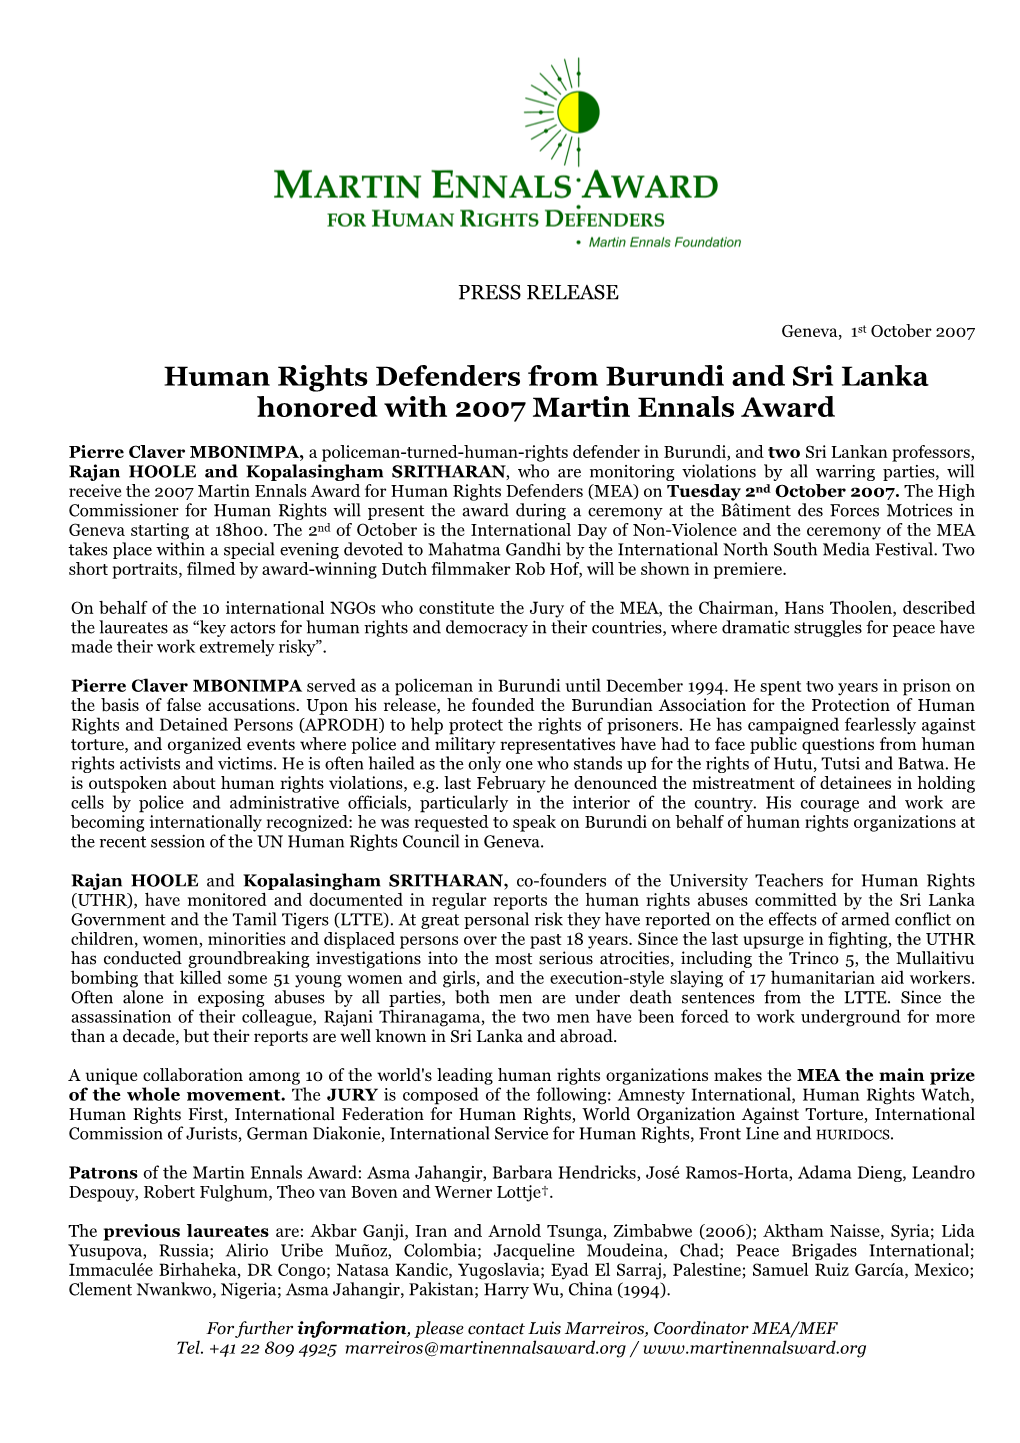 Human Rights Defenders from Burundi and Sri Lanka Honored with 2007 Martin Ennals Award